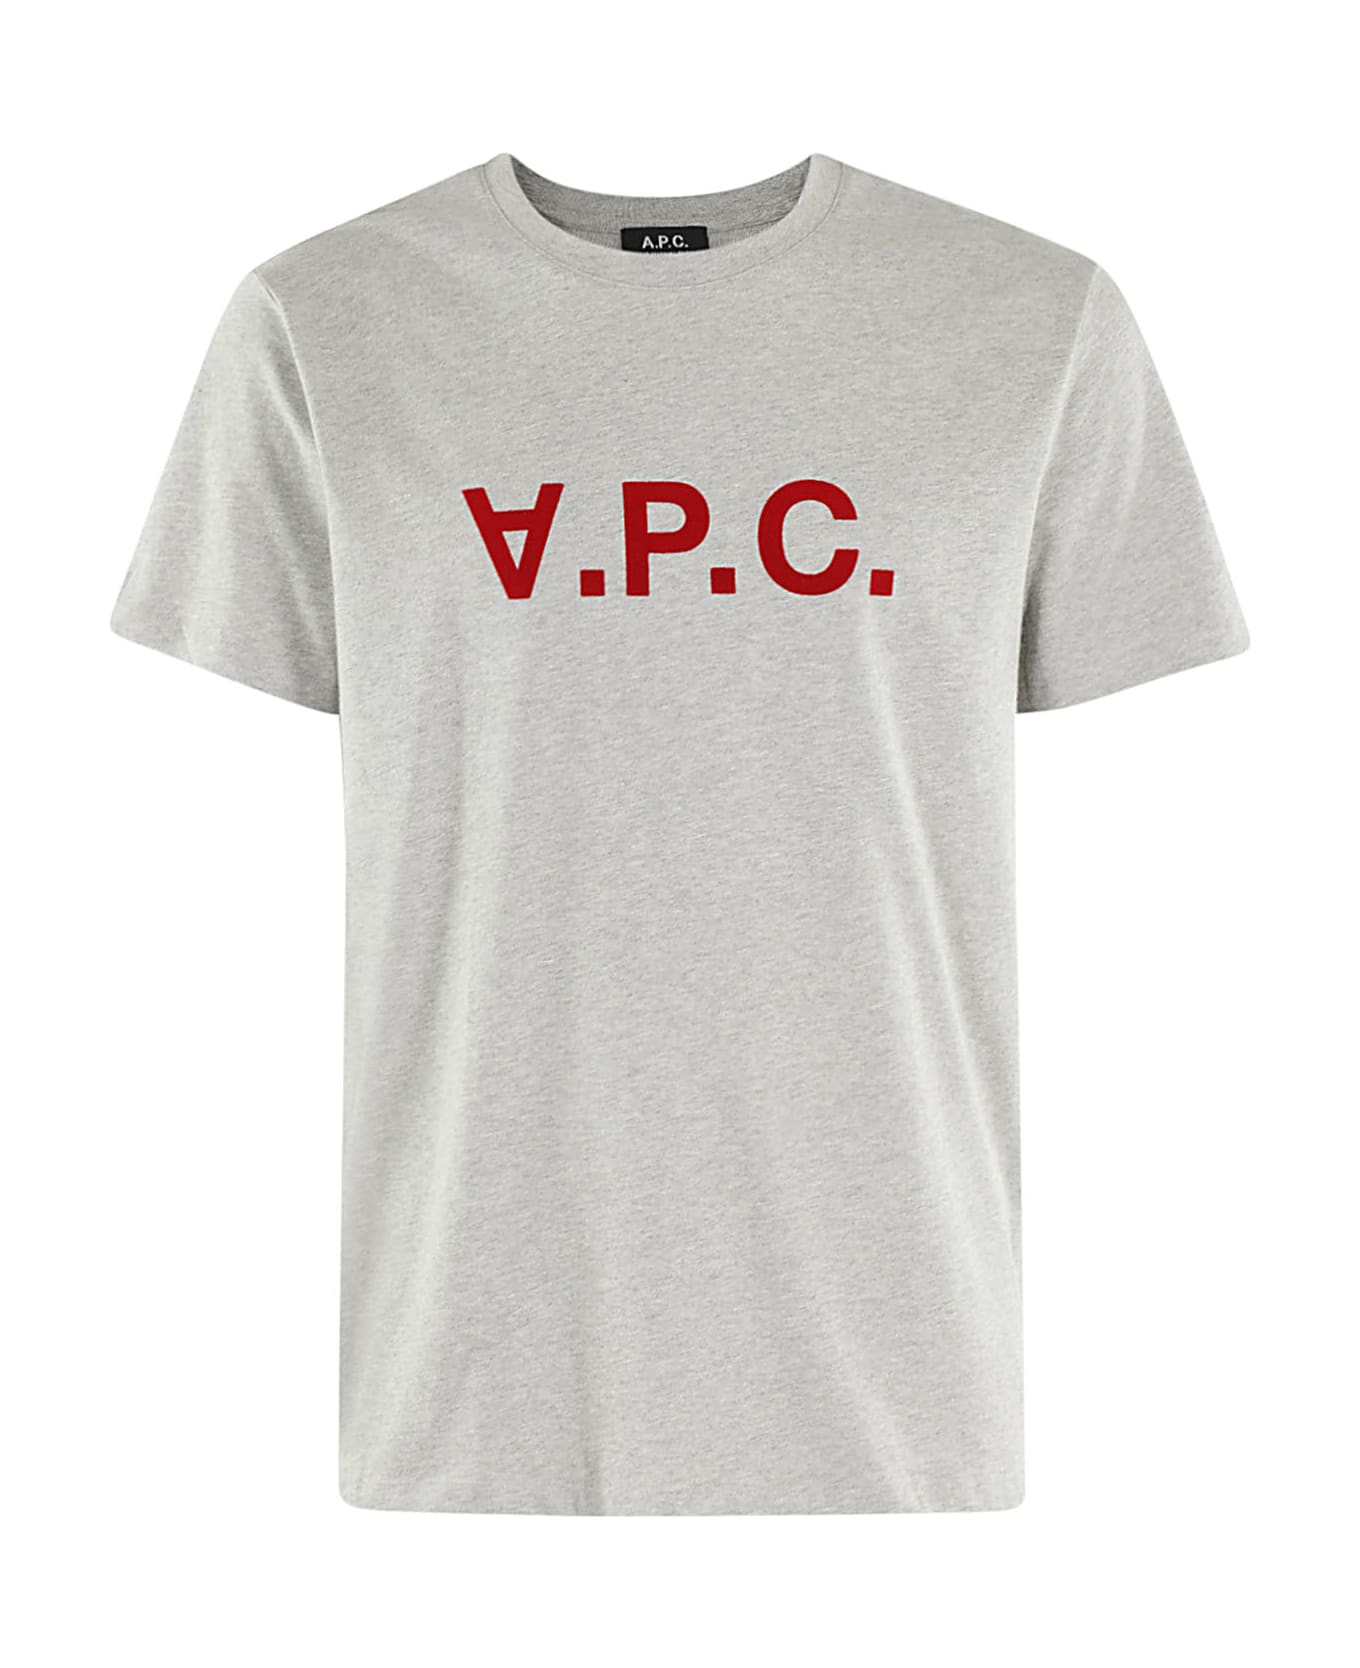 A.P.C. T-shirt - Tph Gris Clar Chine Rouge